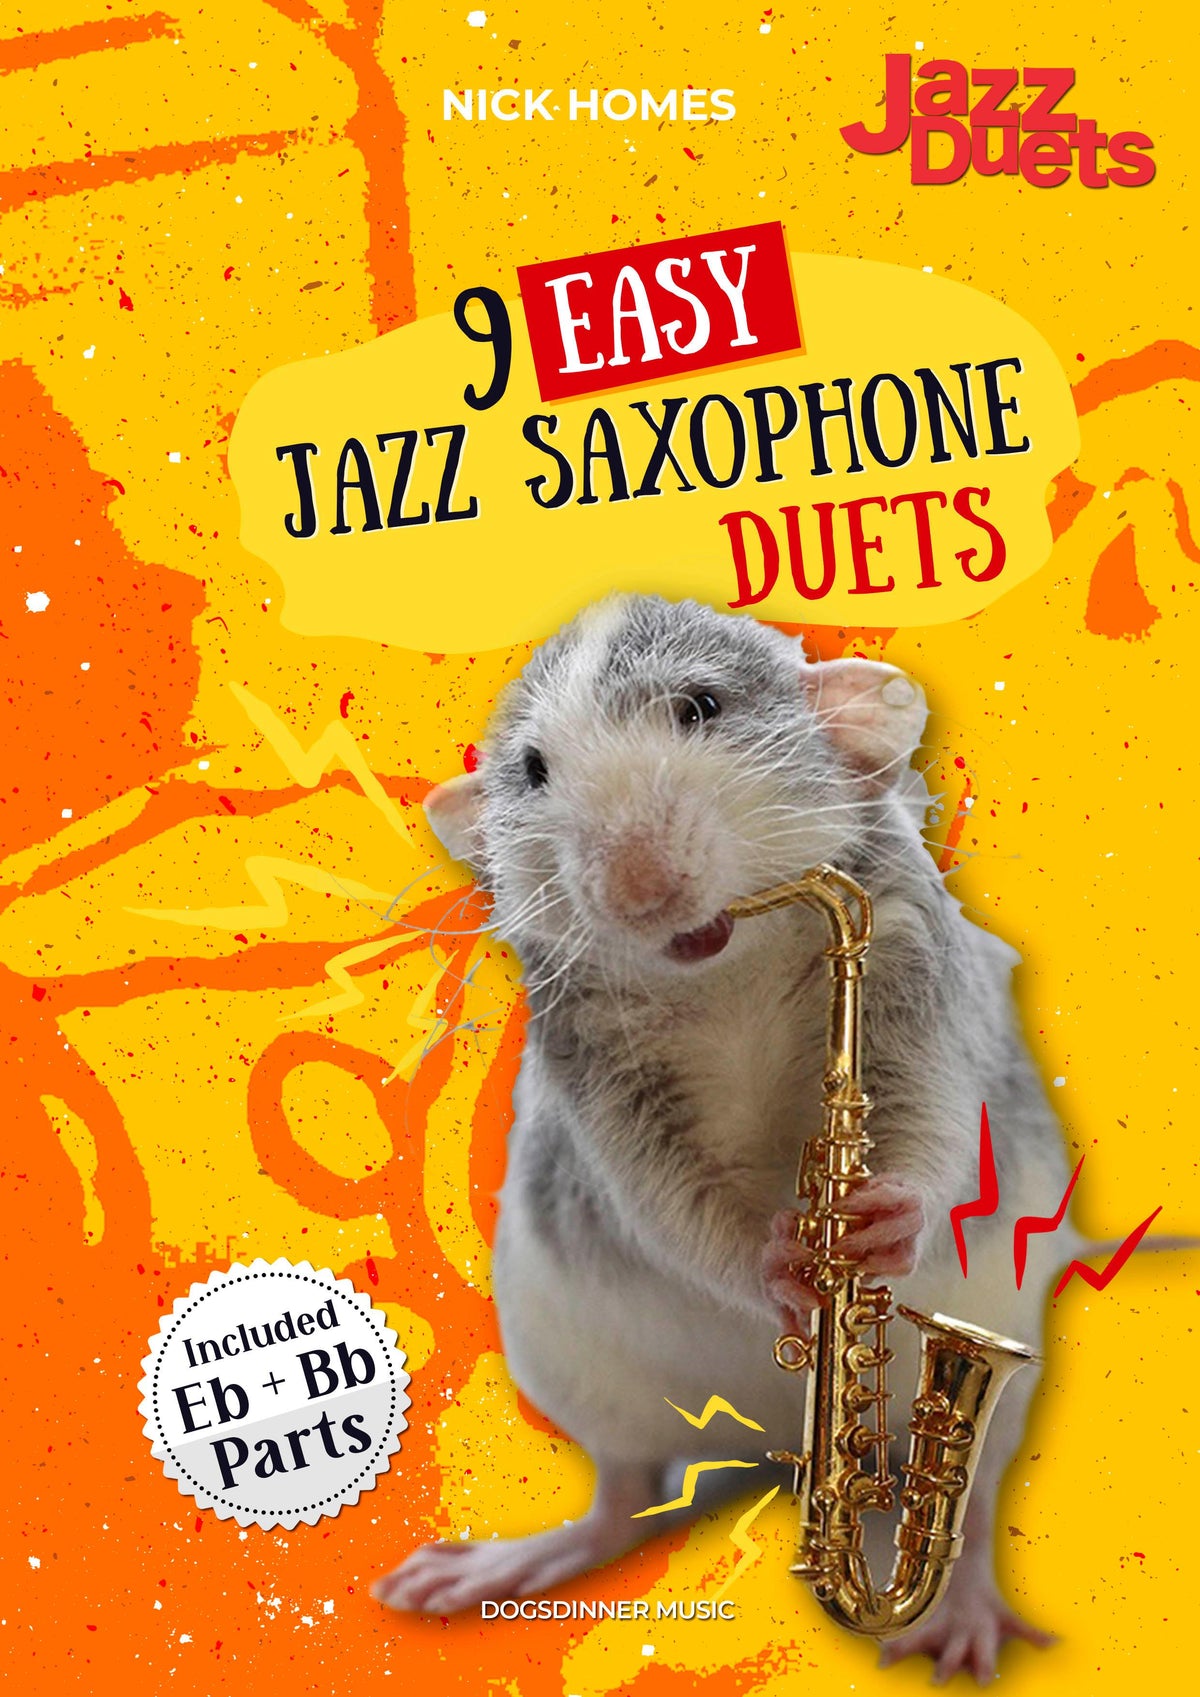 9 Easy Jazz Saxophone Duets- Jazzduets